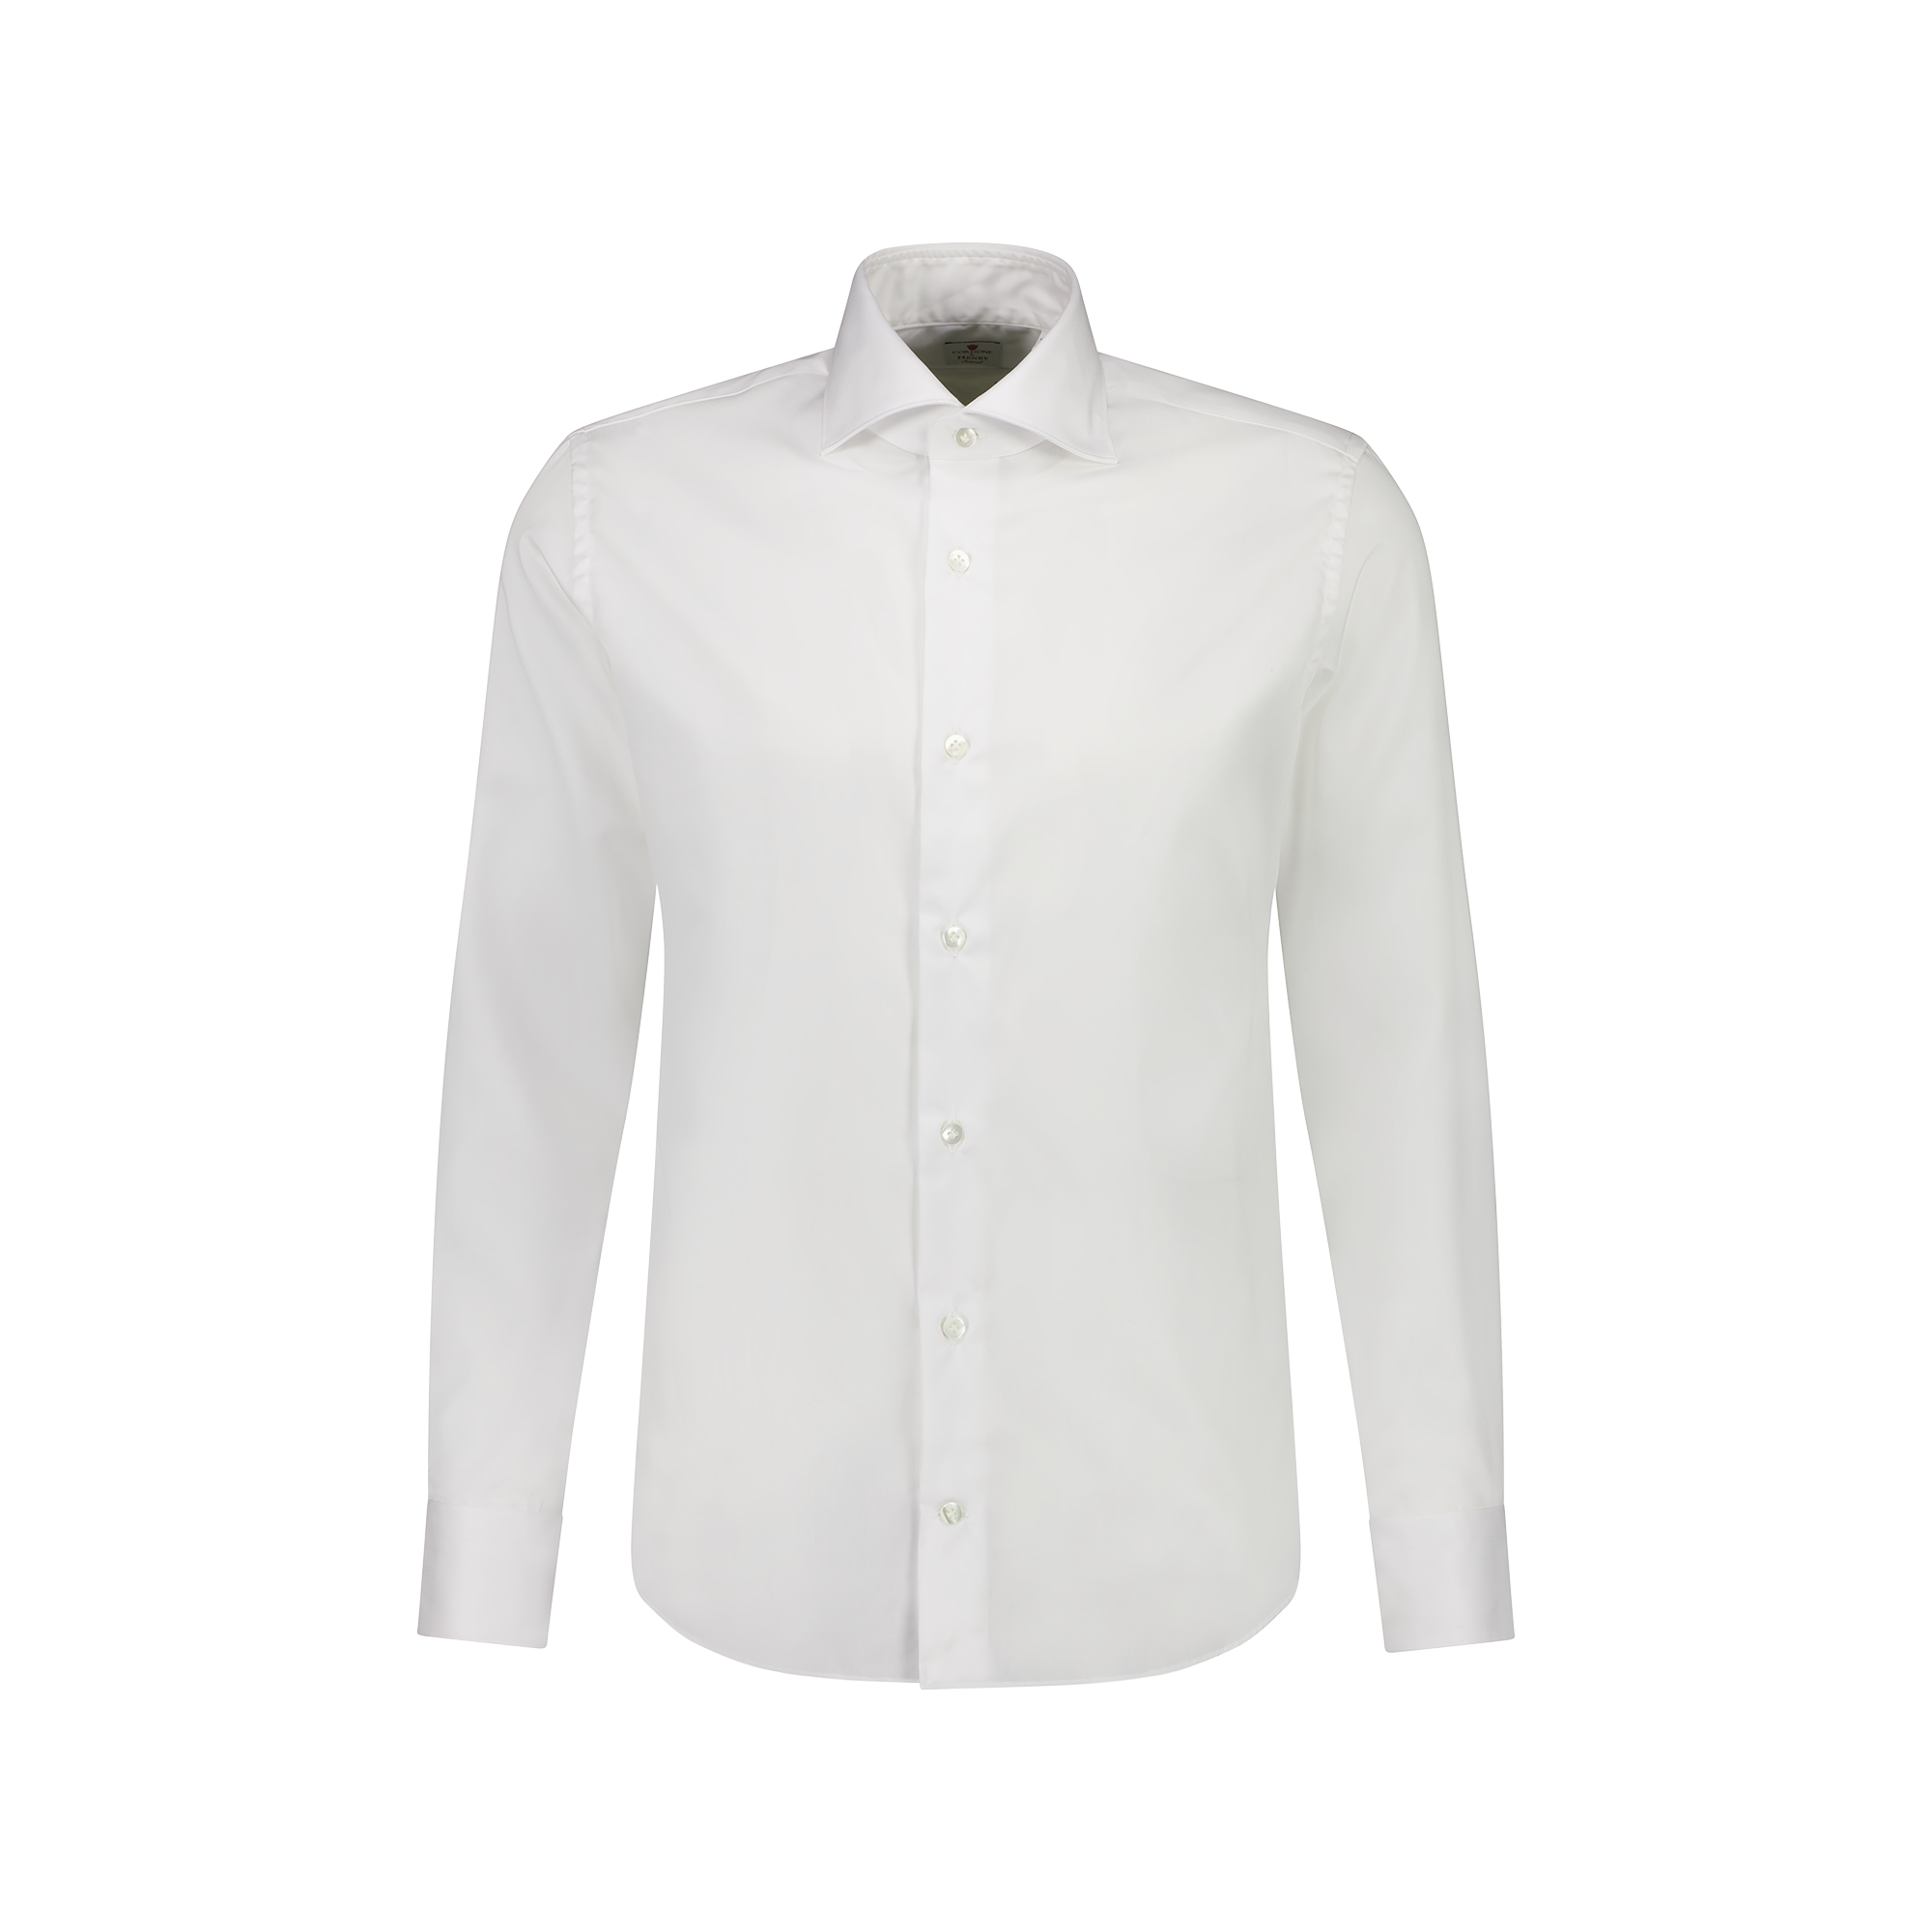 CORDONE Elegance Max Shirt in WINTER WHITE